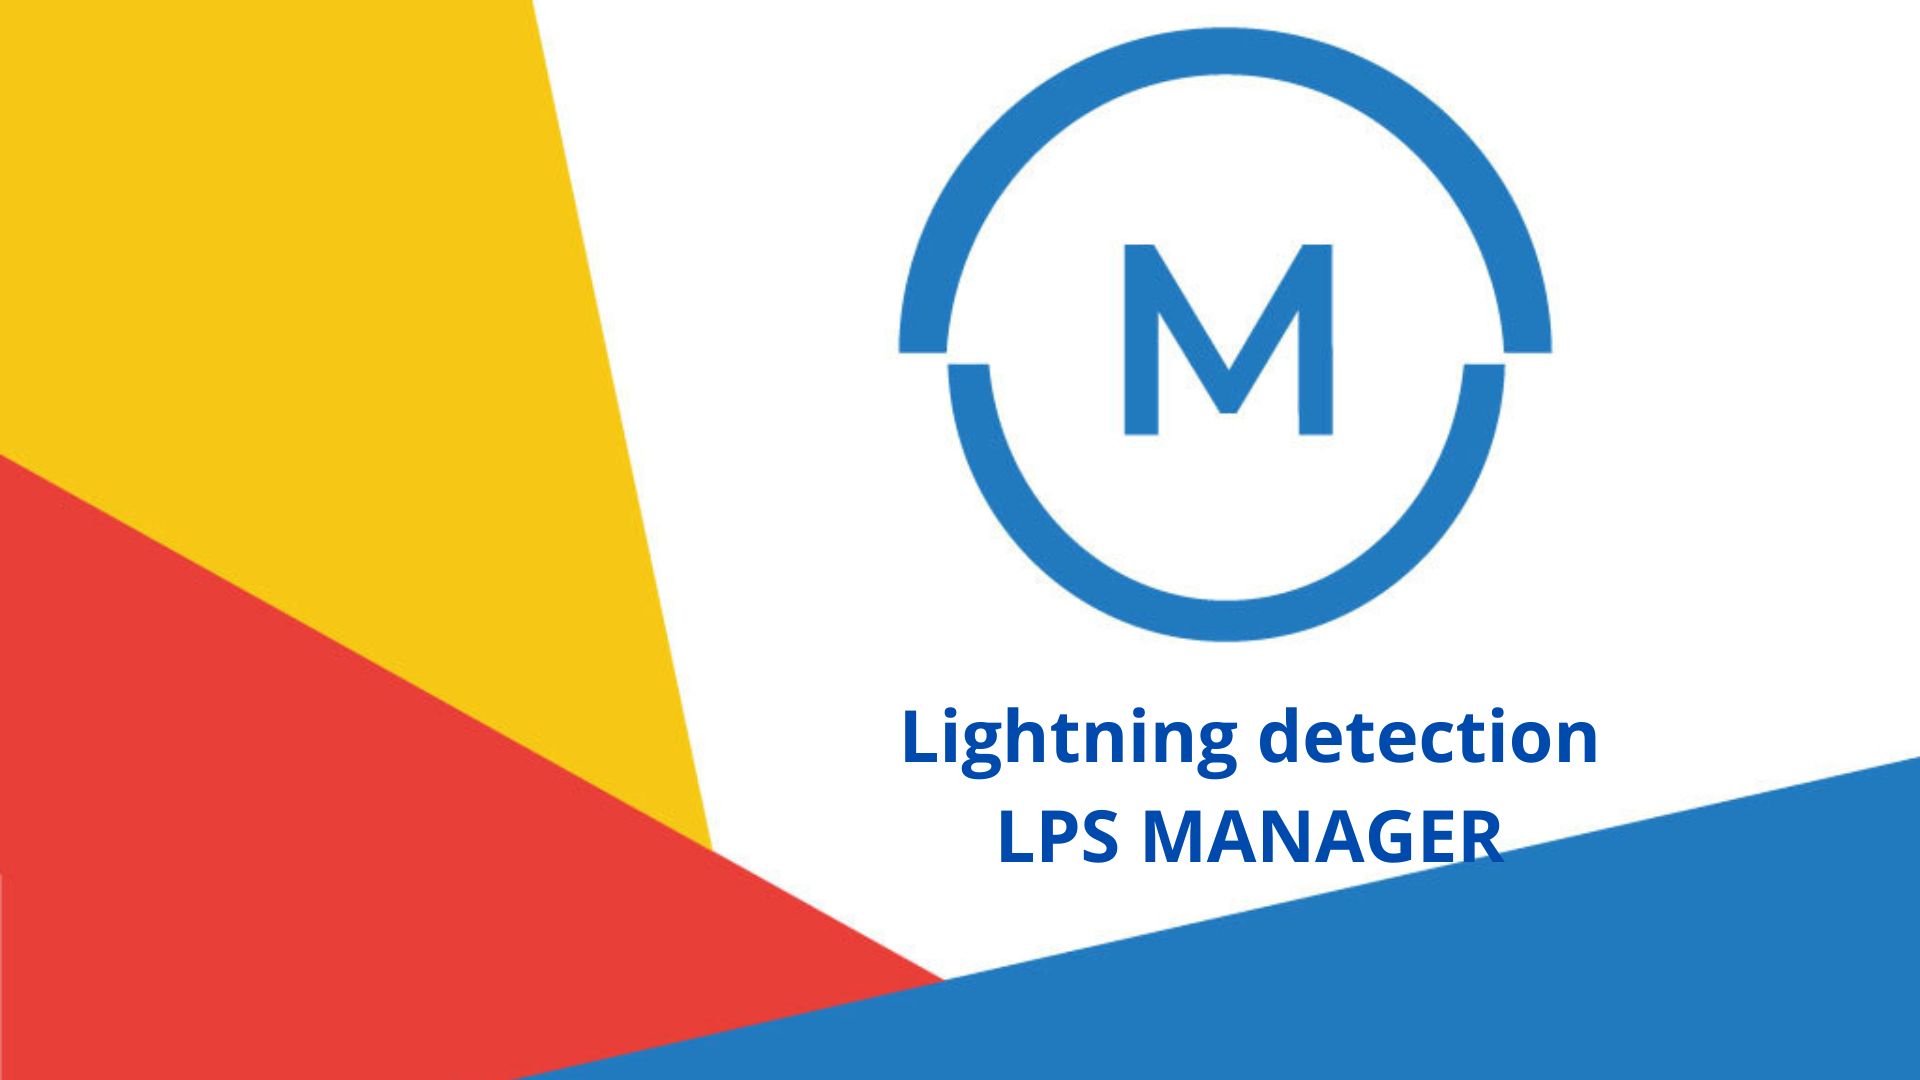 LPS Manager, lightning detection